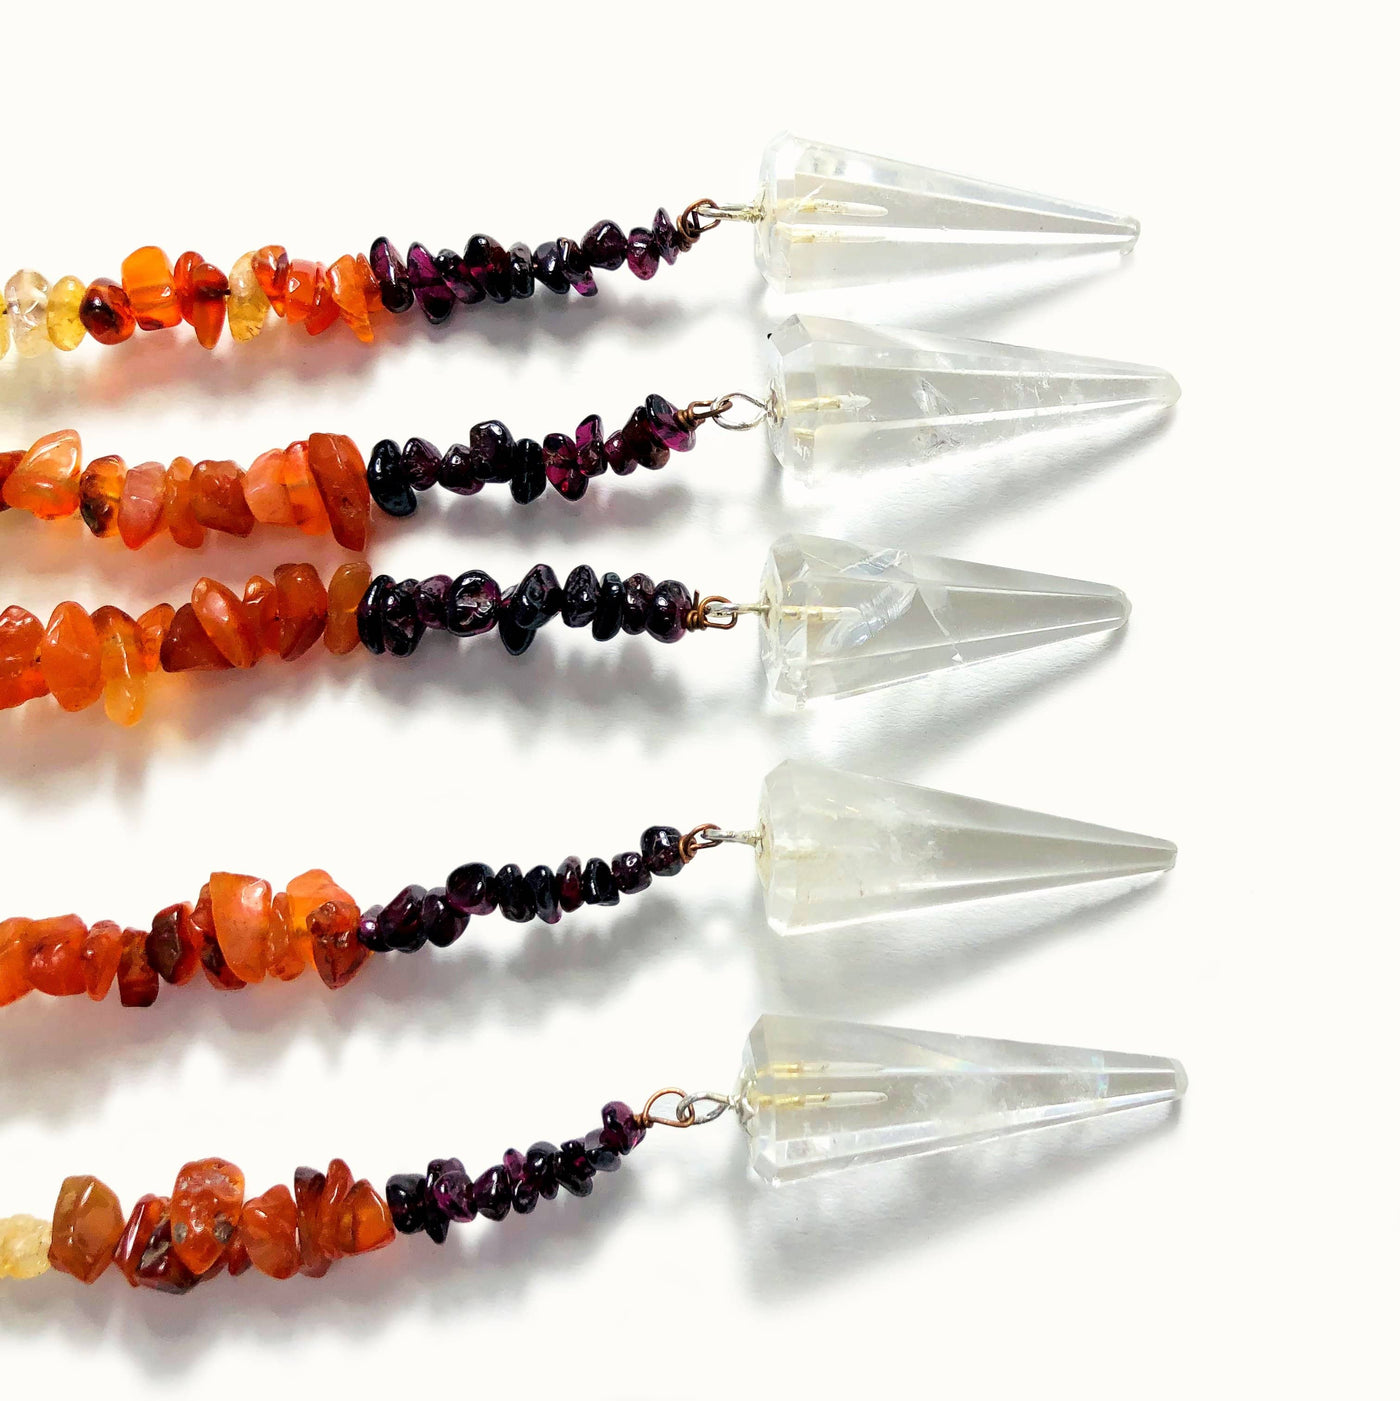 Crystal Quartz Pendulum with Chakra Beads  - close up of crystals